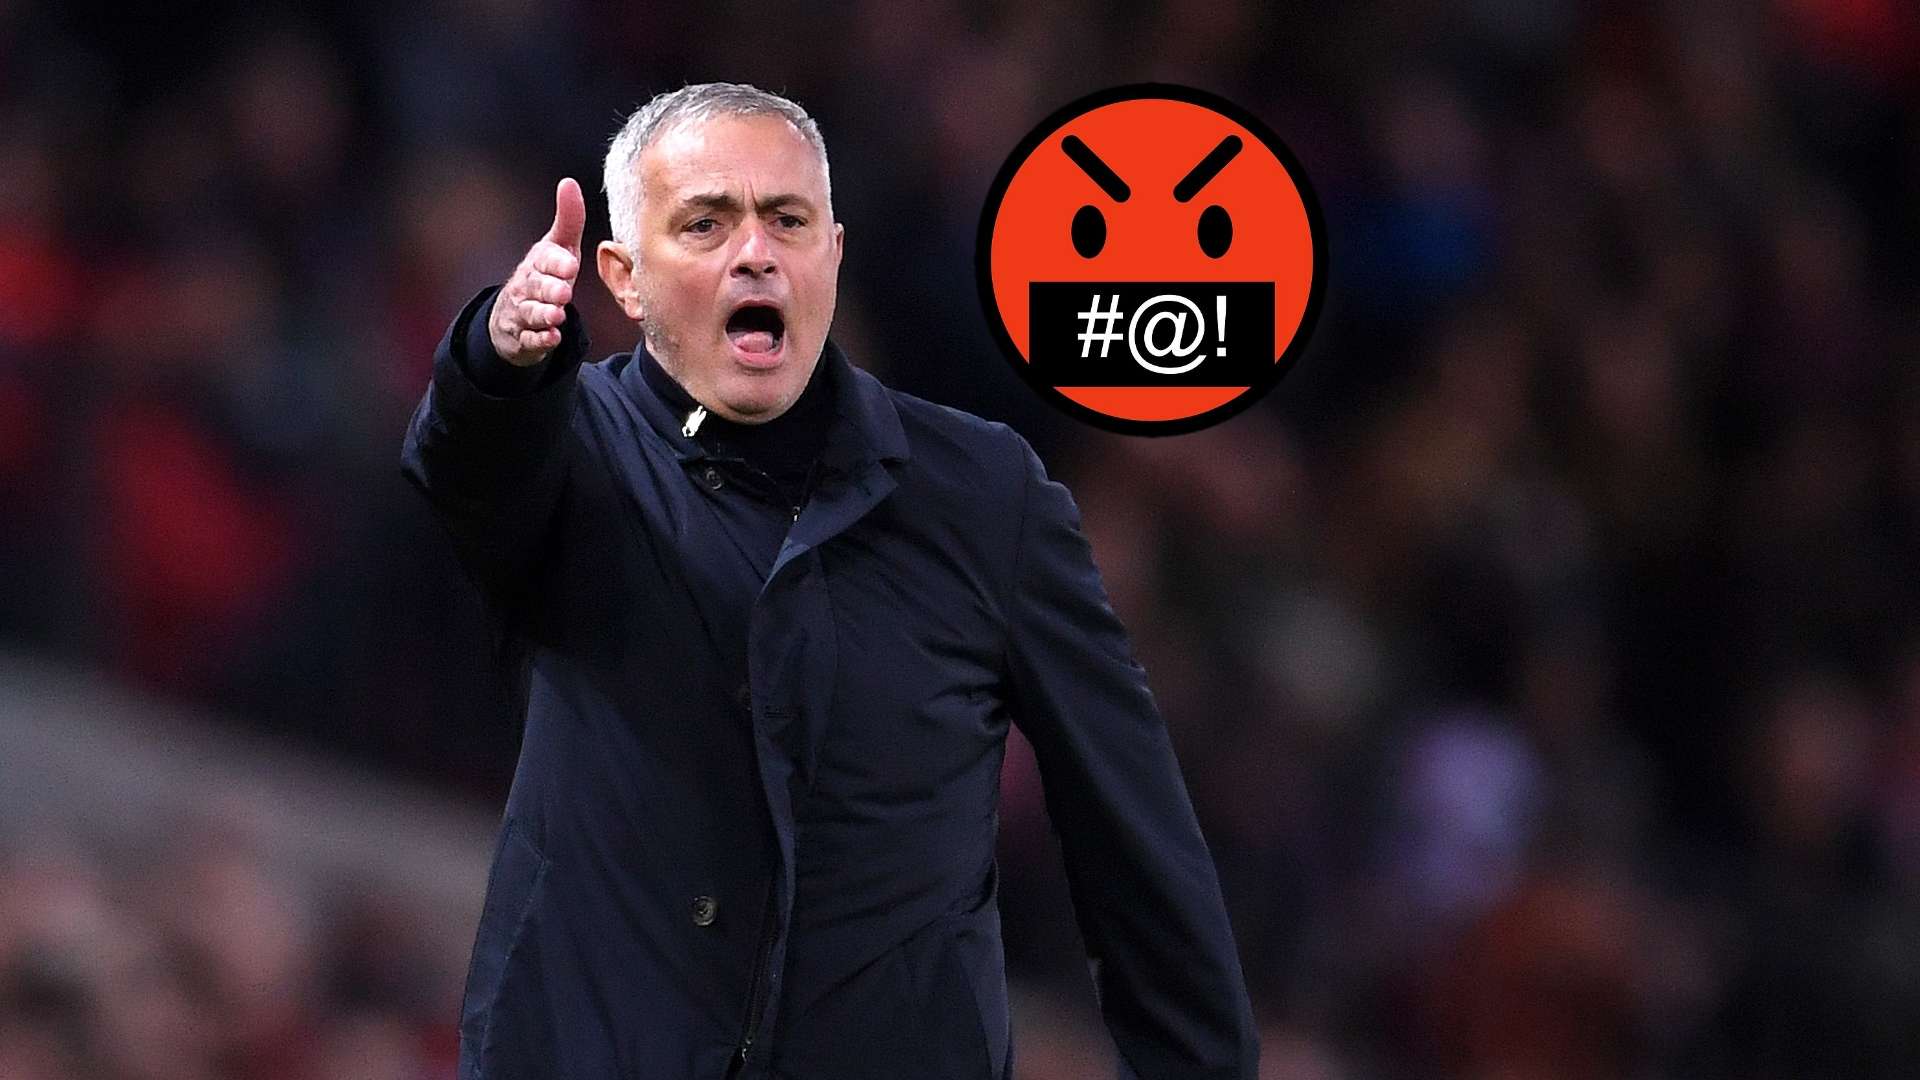 Mourinho swearing emoji